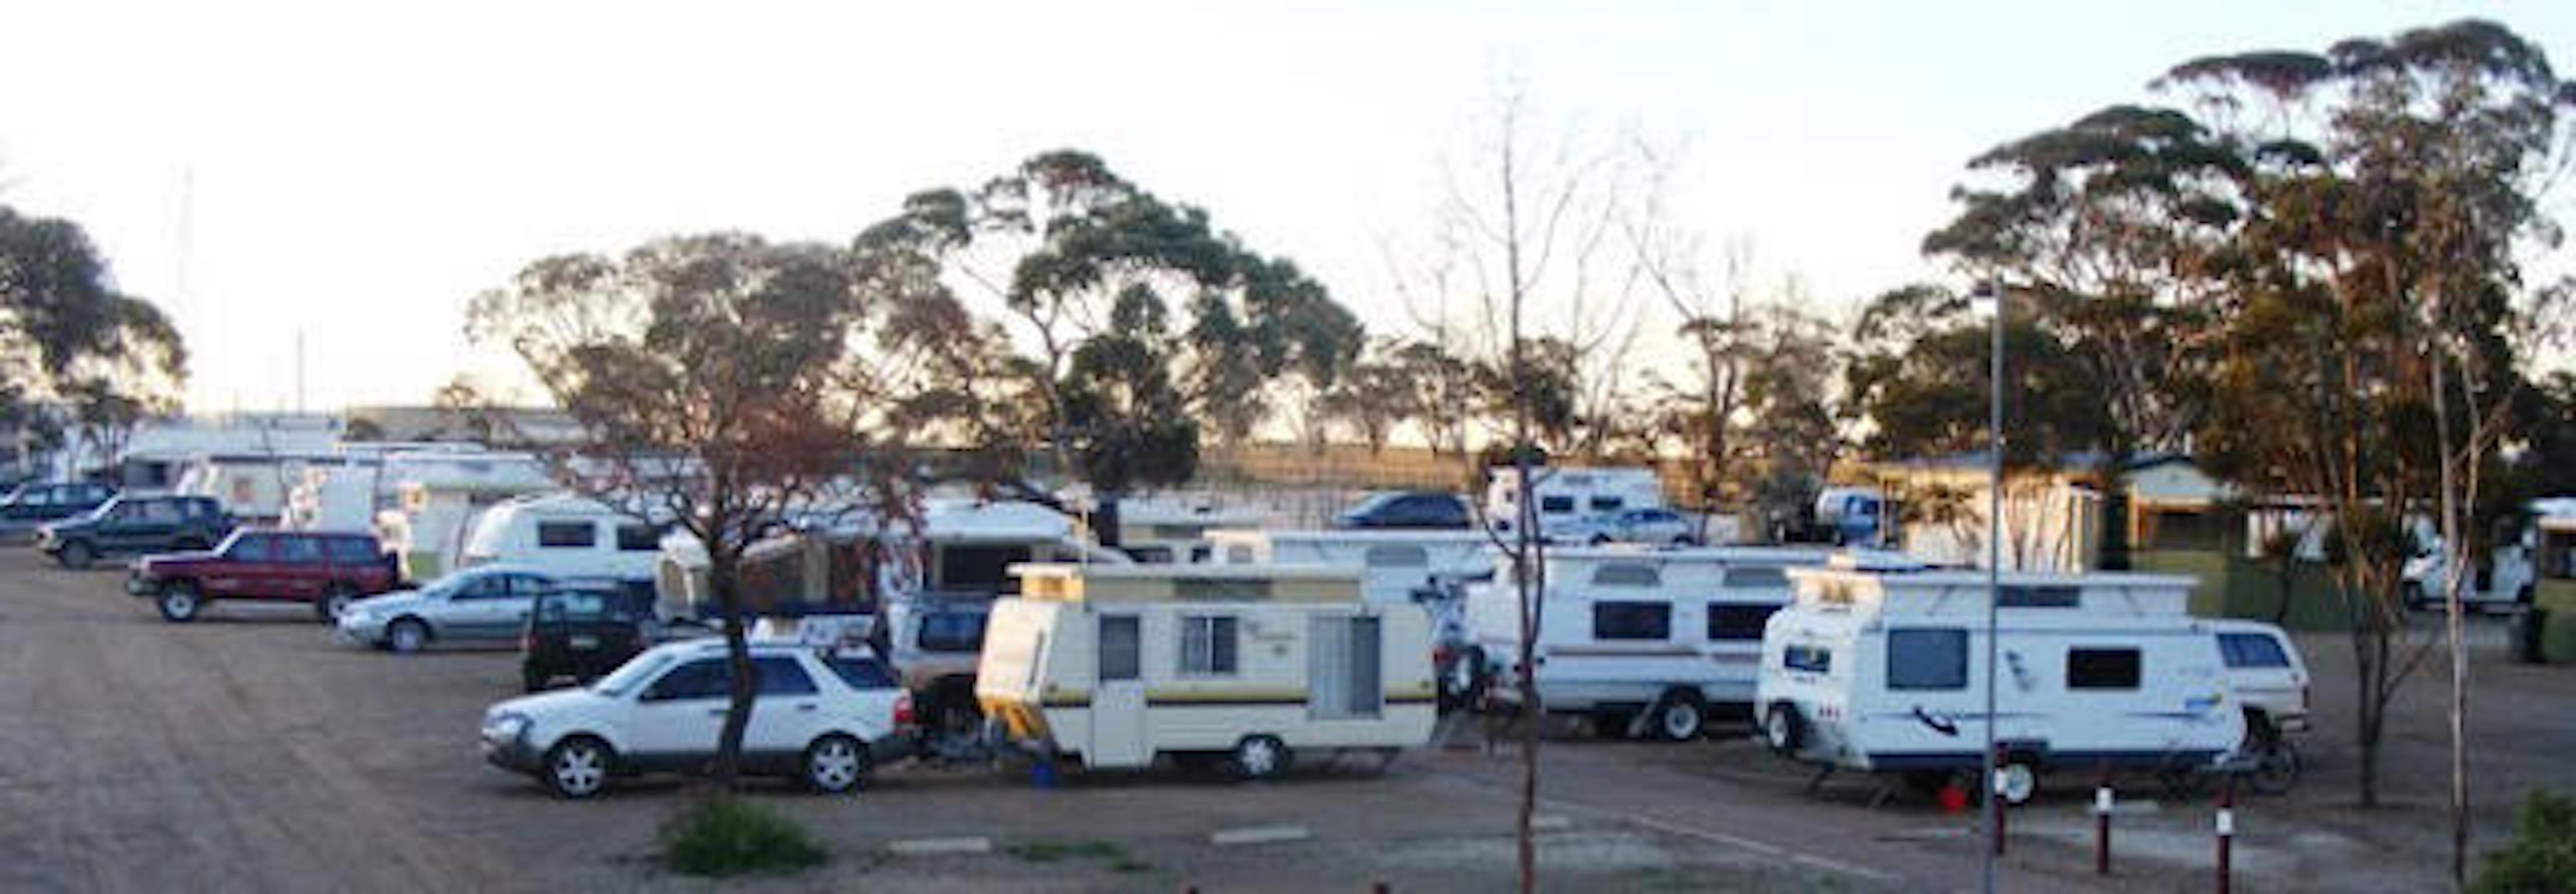 Woomera Traveller's Village and Caravan Park - Accommodation Cooktown